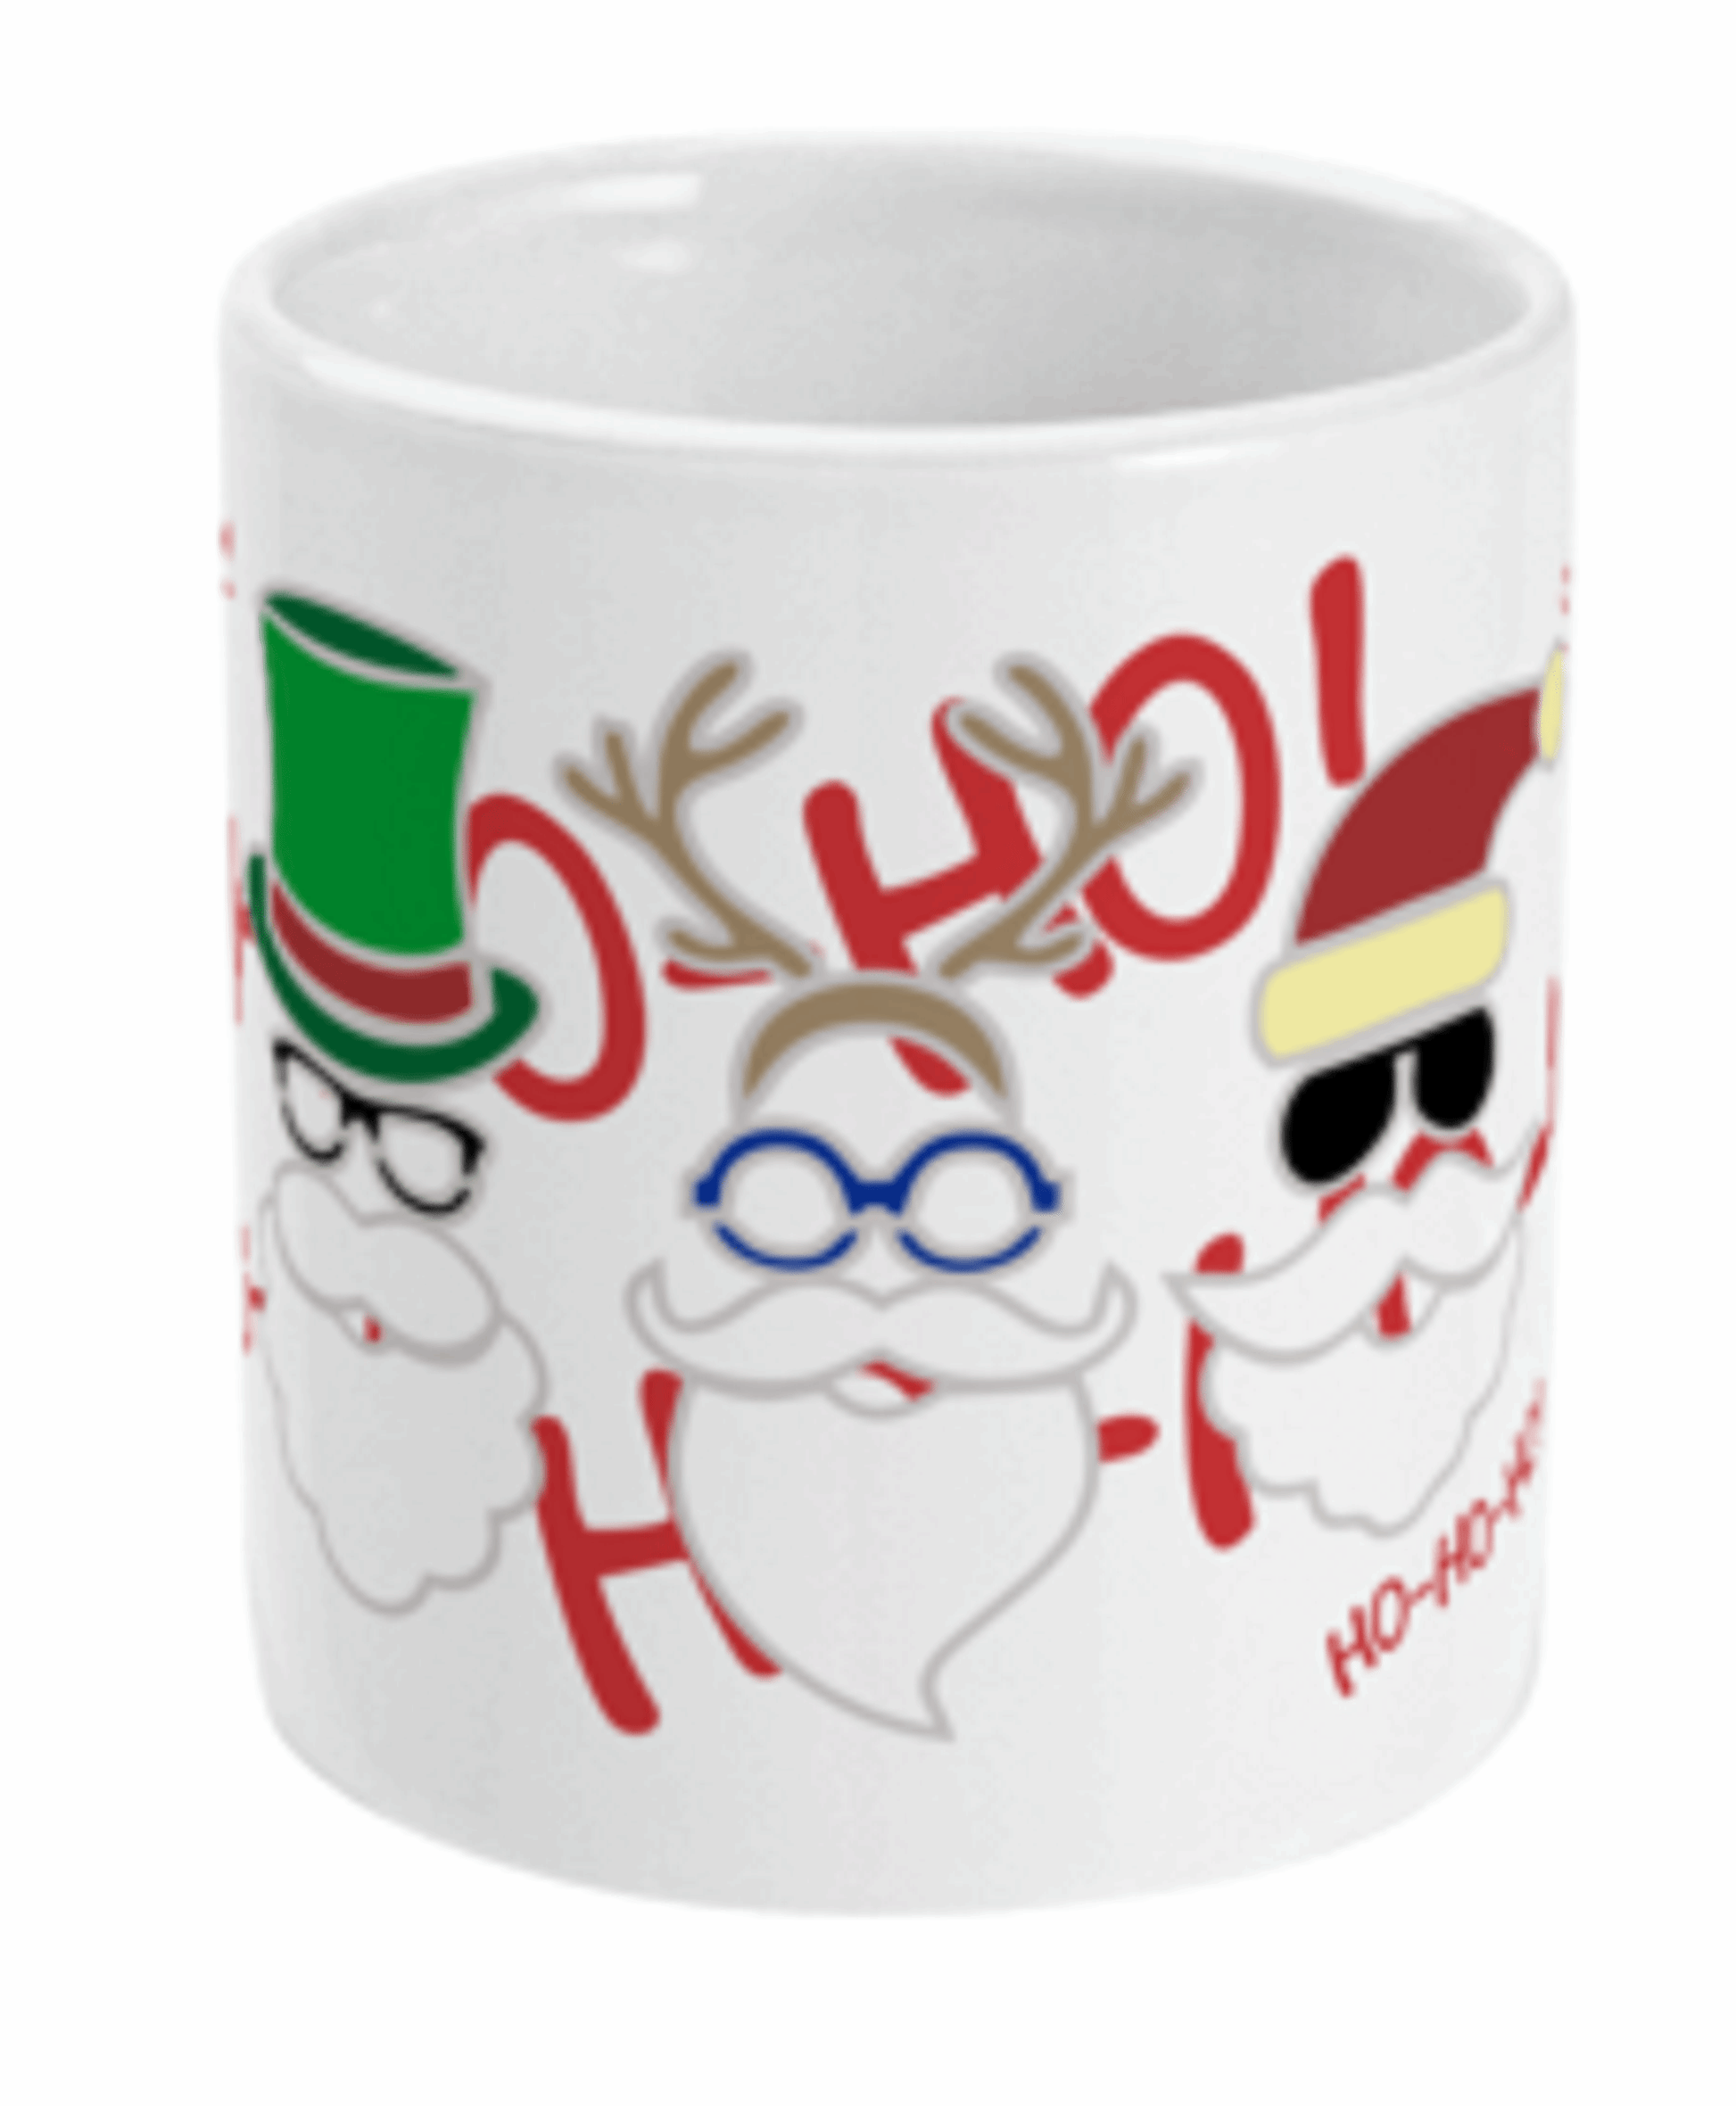  Ho-Ho-Ho Christmas Mug by Free Spirit Accessories sold by Free Spirit Accessories